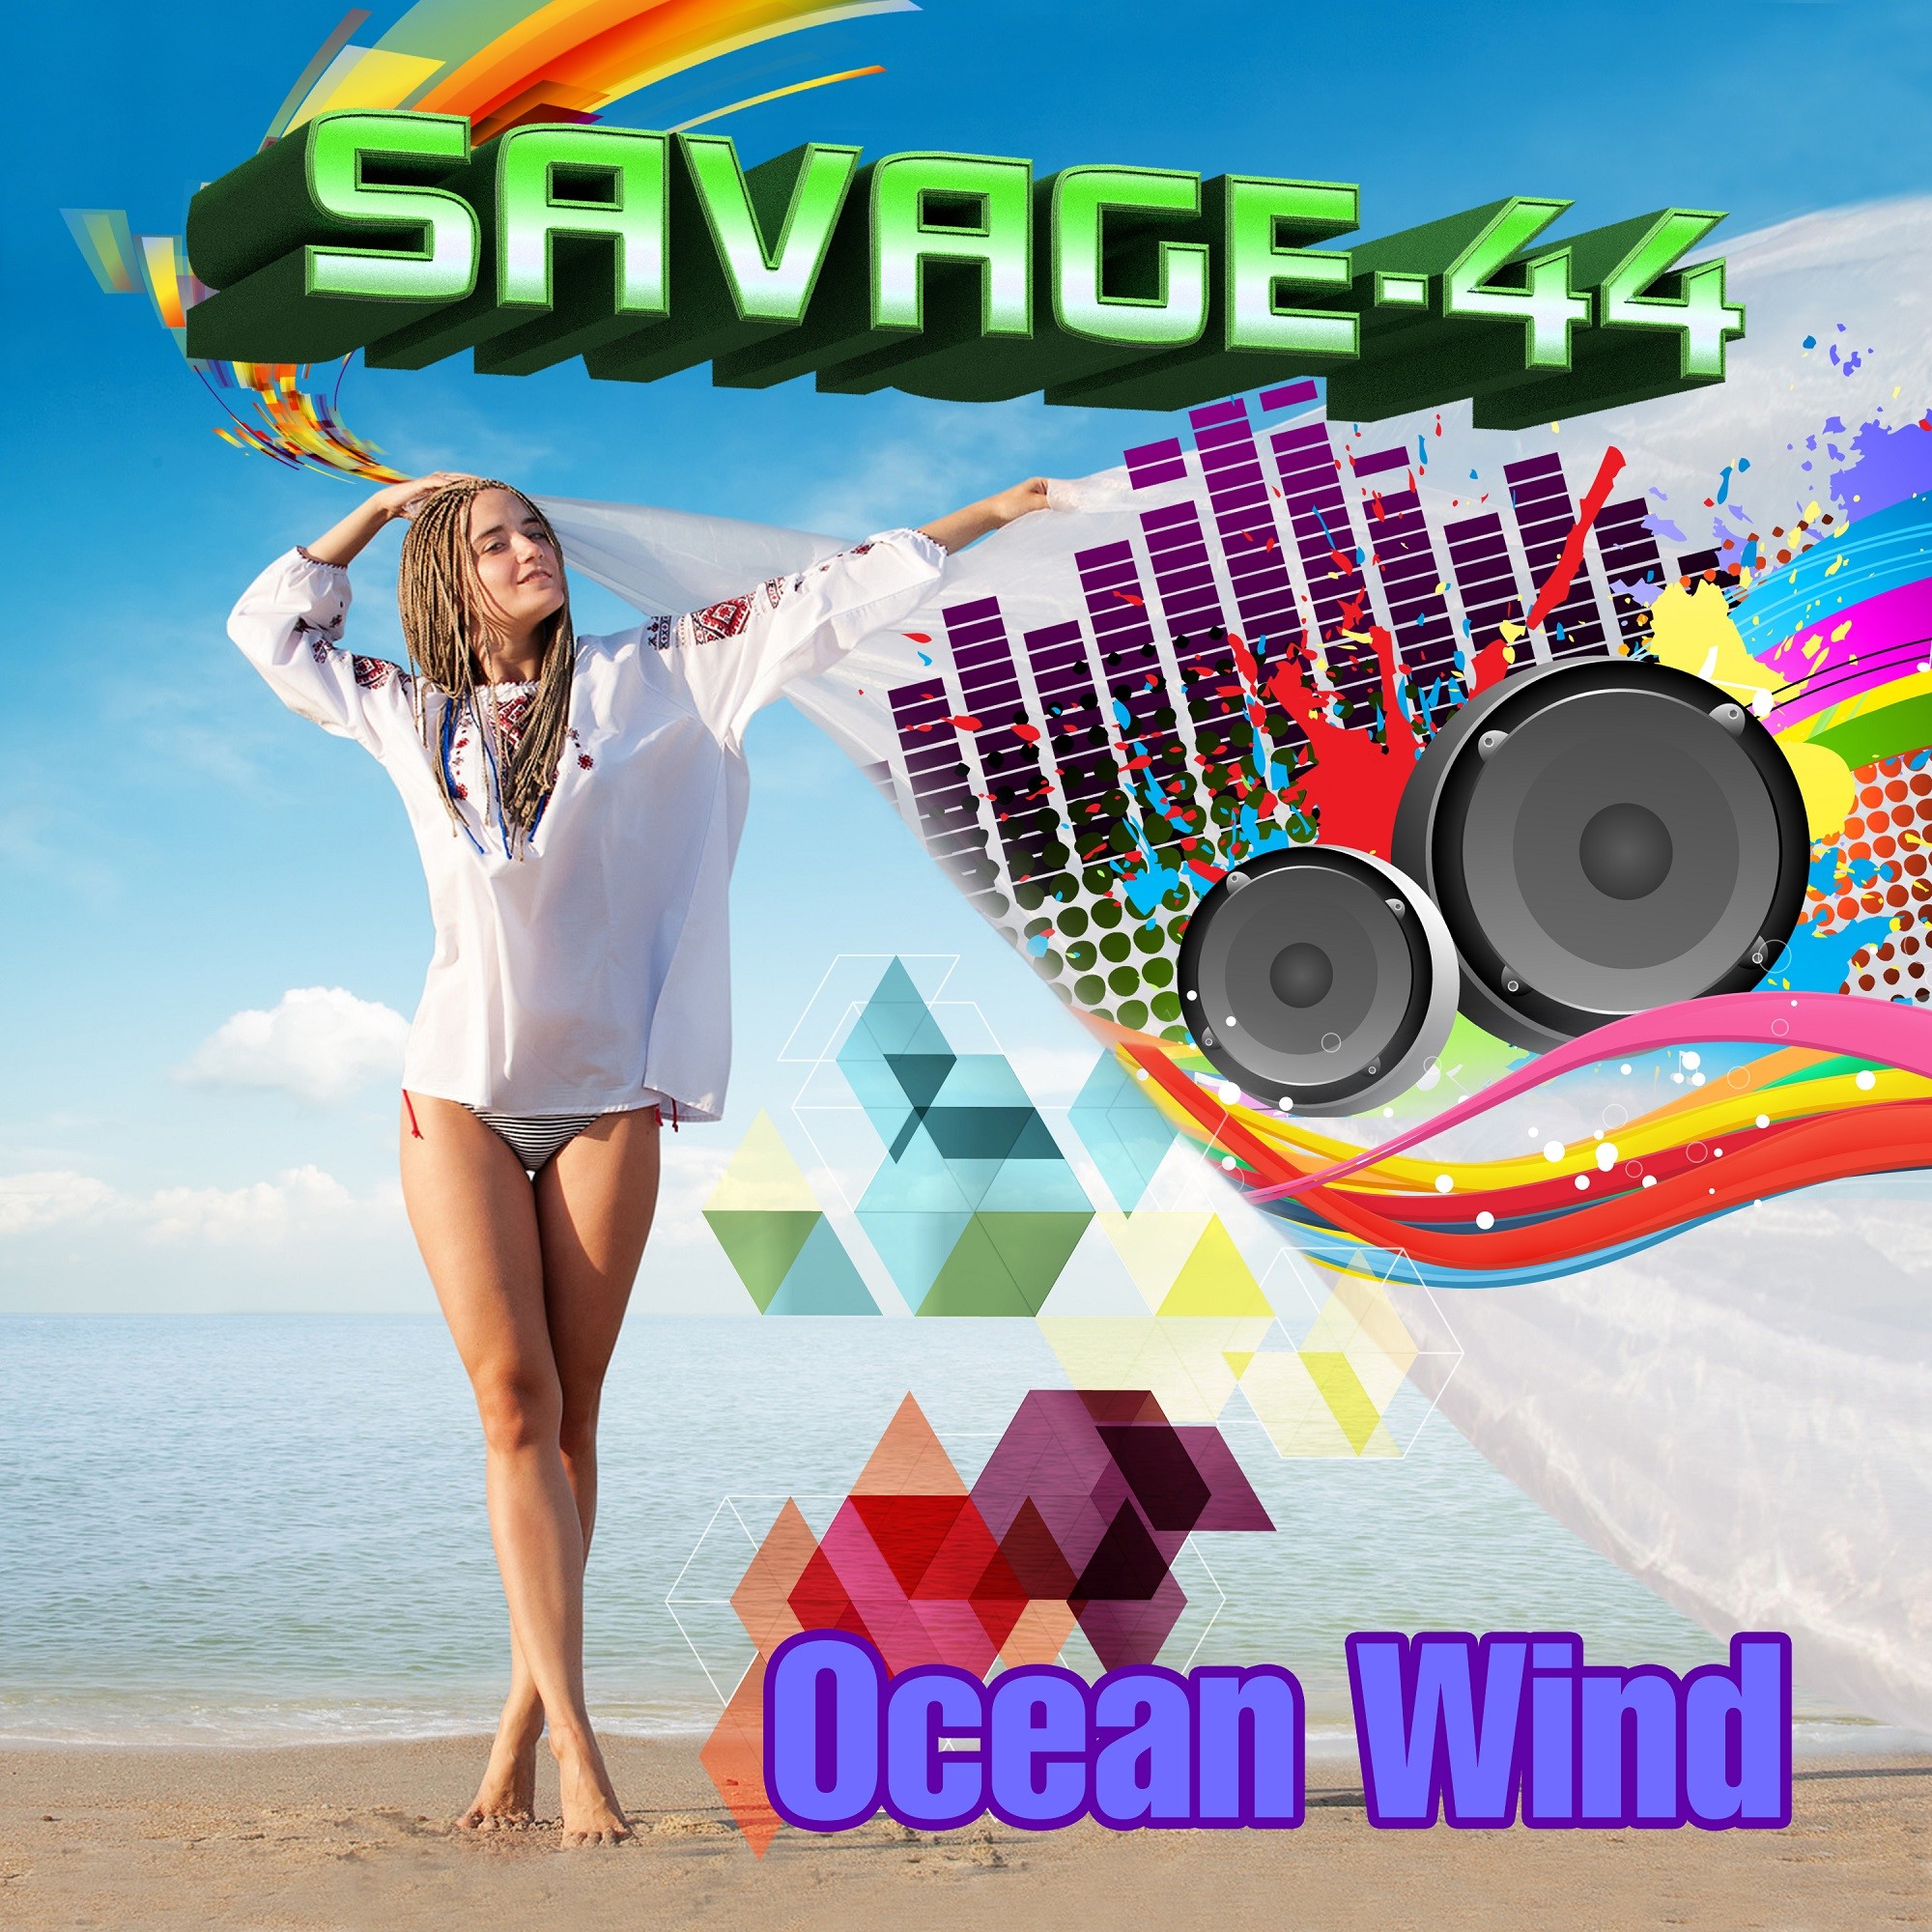 Savage 44 the music ring new. Savage 44. Savage-44 - City Light New Eurodance Hit 2024. Savage-44 - Ocean Wind (Top Deep House Hit). Savage-44 - City Light.